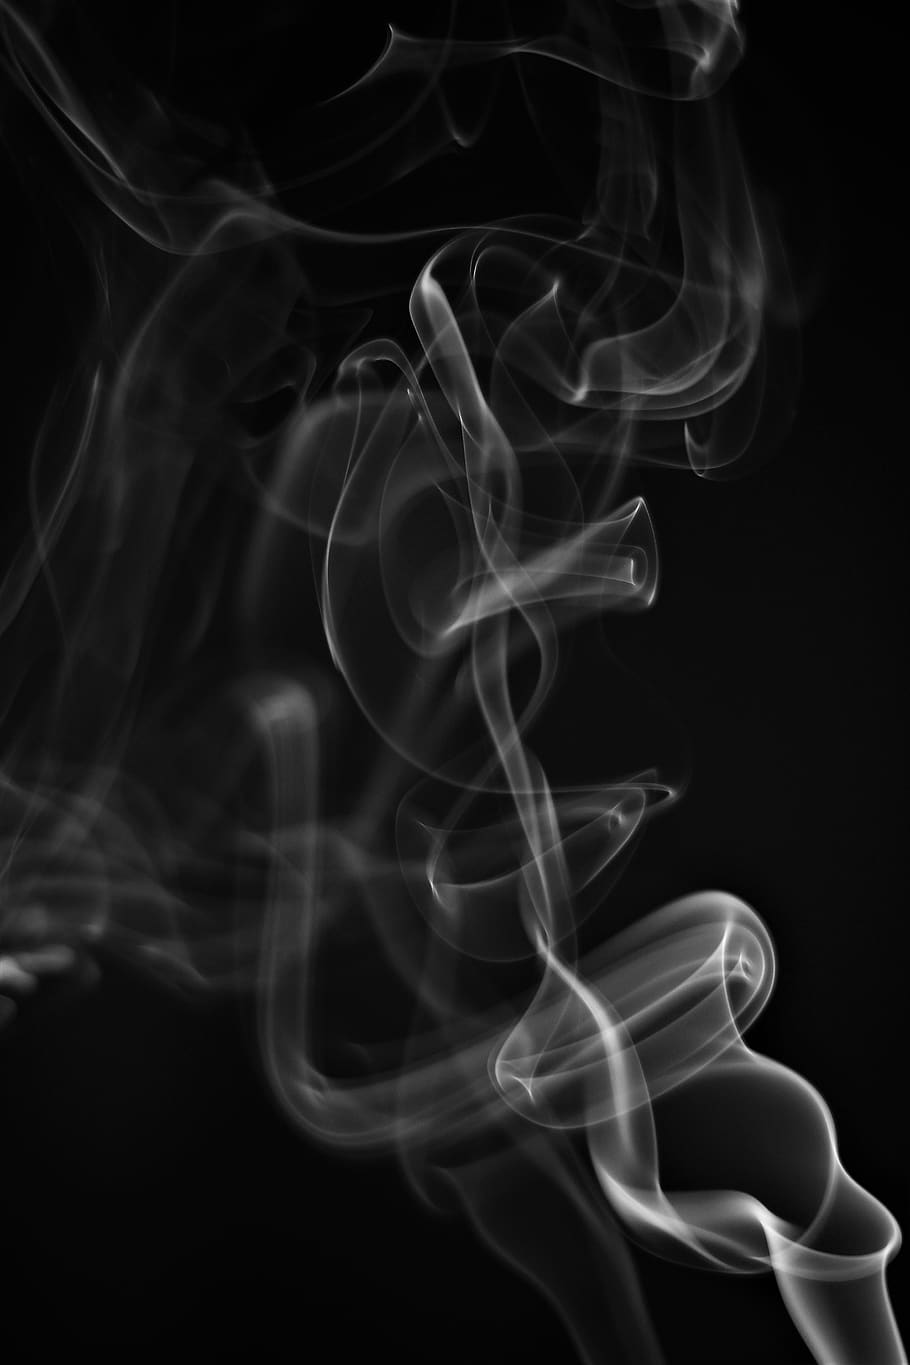 humo, vapor, aroma, incienso, vapeo, aire, flujo, humo - estructura física, fondo negro, foto de estudio